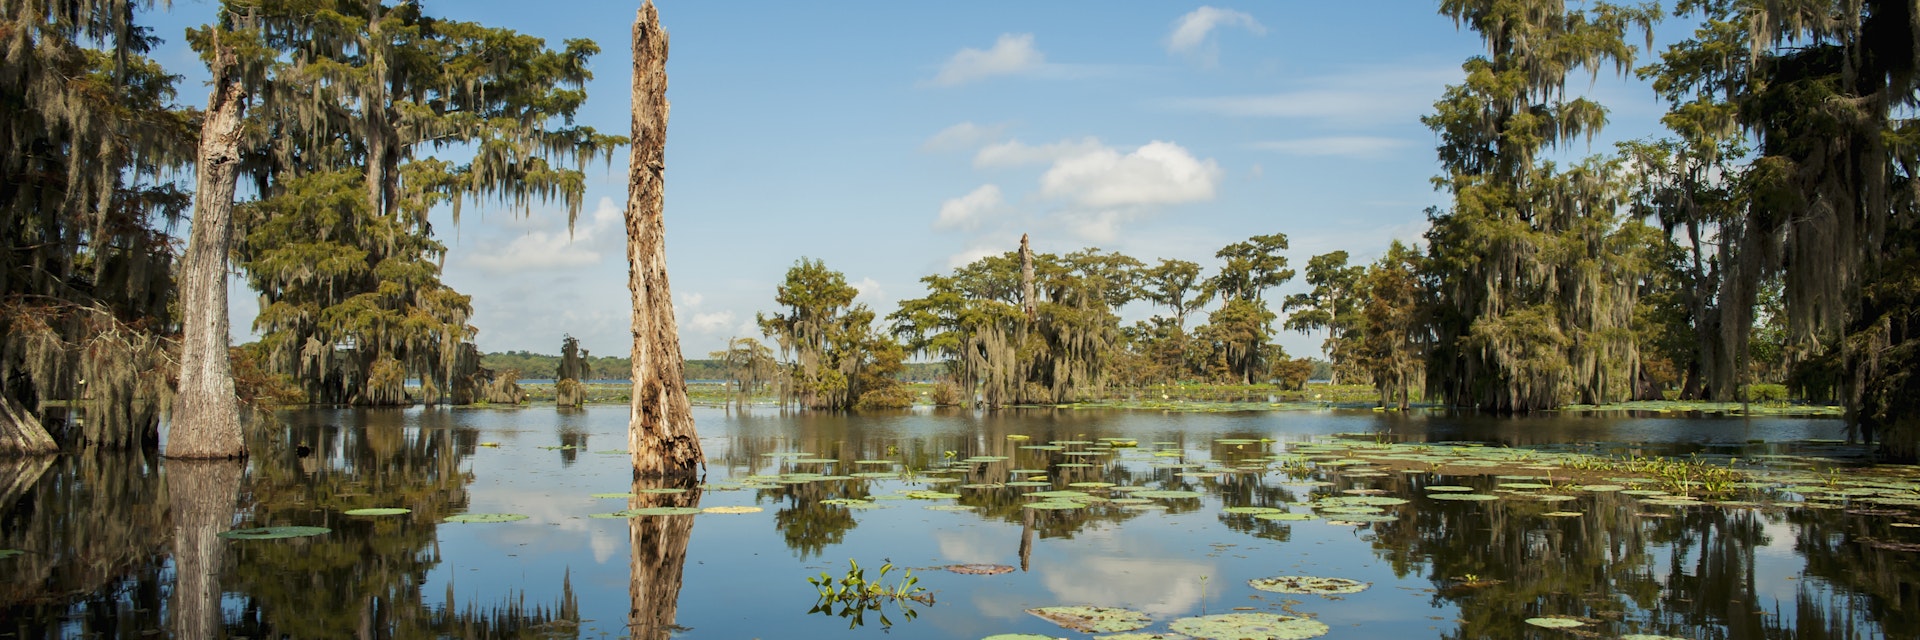 USA, Louisiana, Swamp landscape